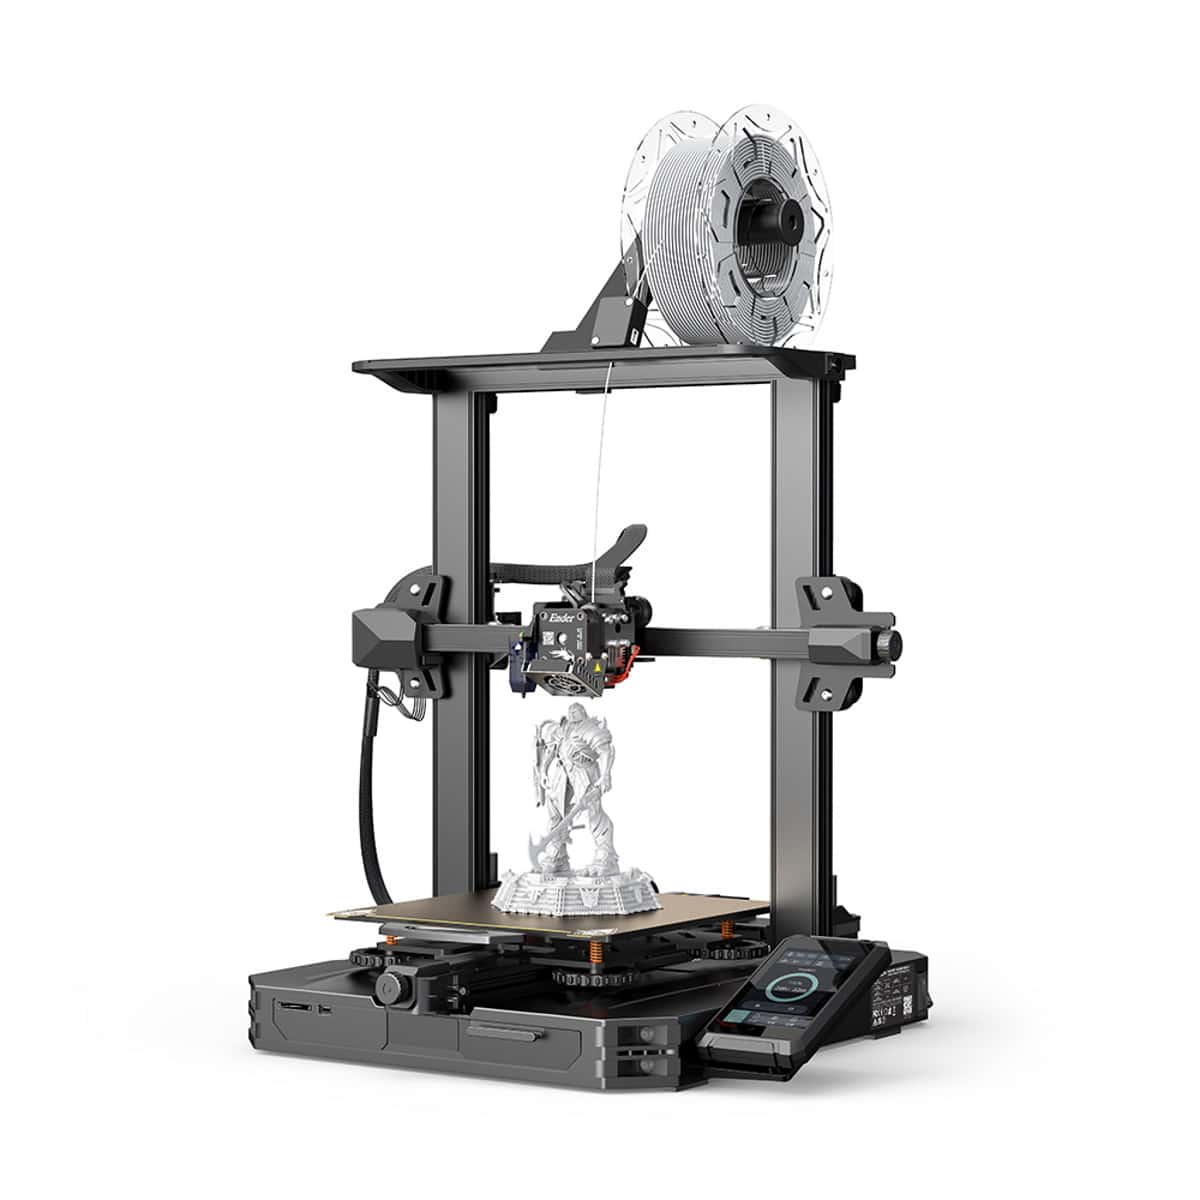 Køb Creality Ender 3 S1 Pro 3d printer - Pris 2959.00 kr.